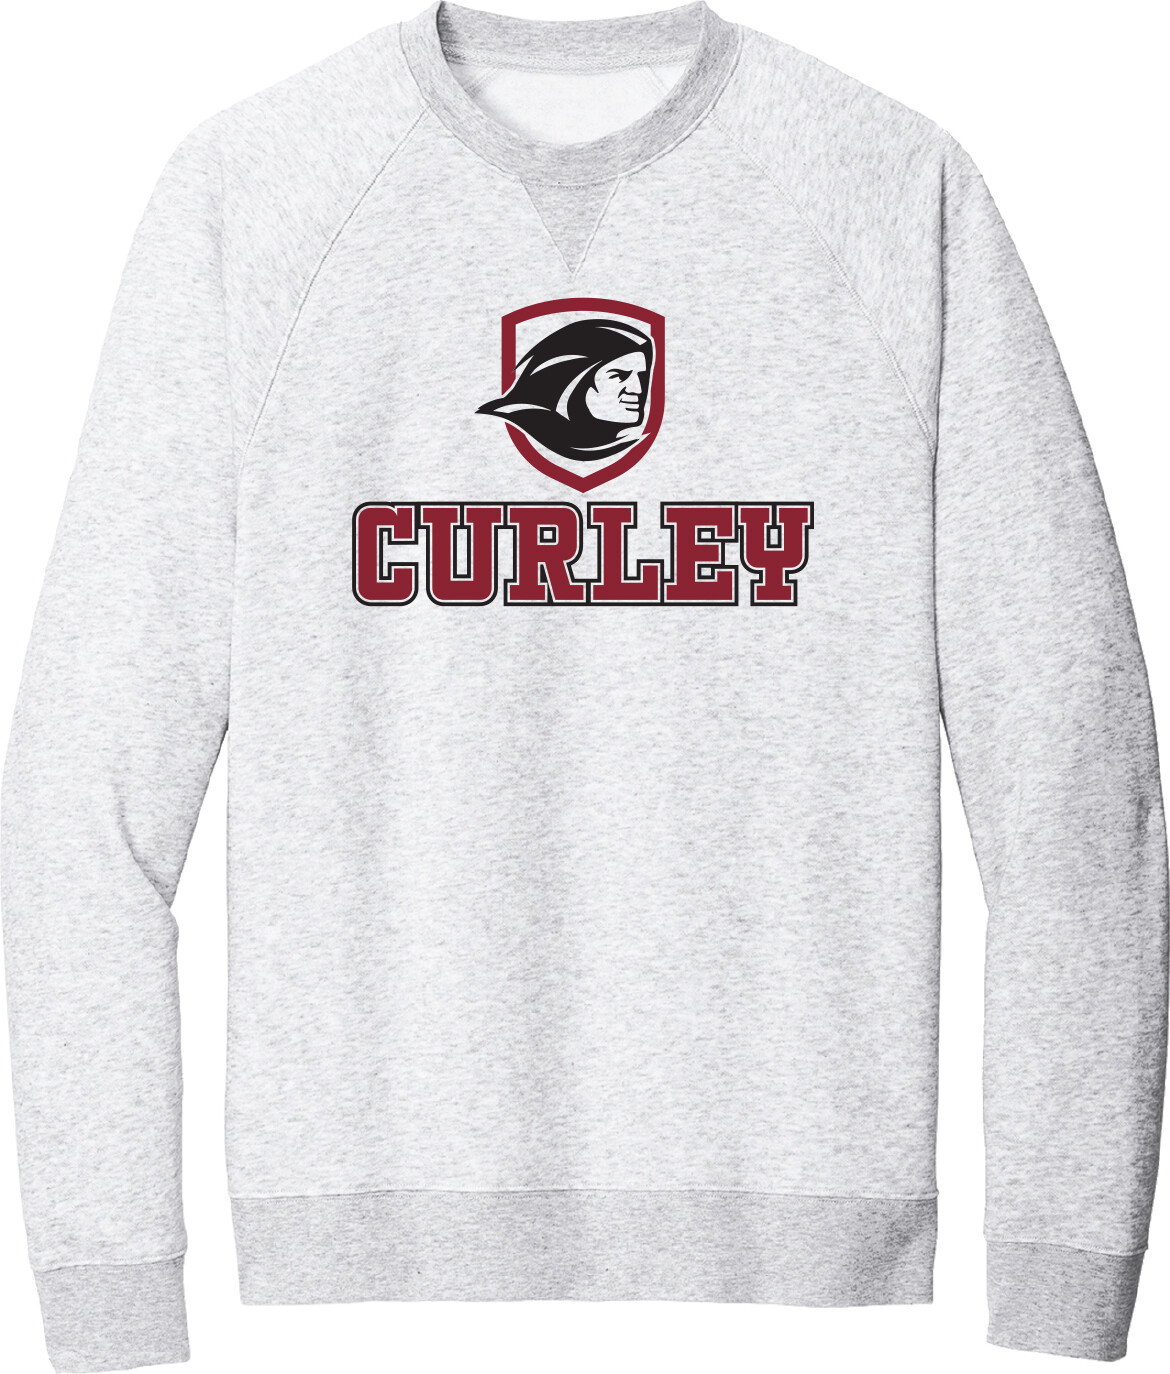 Curley New Logo Crew Neck Gray S